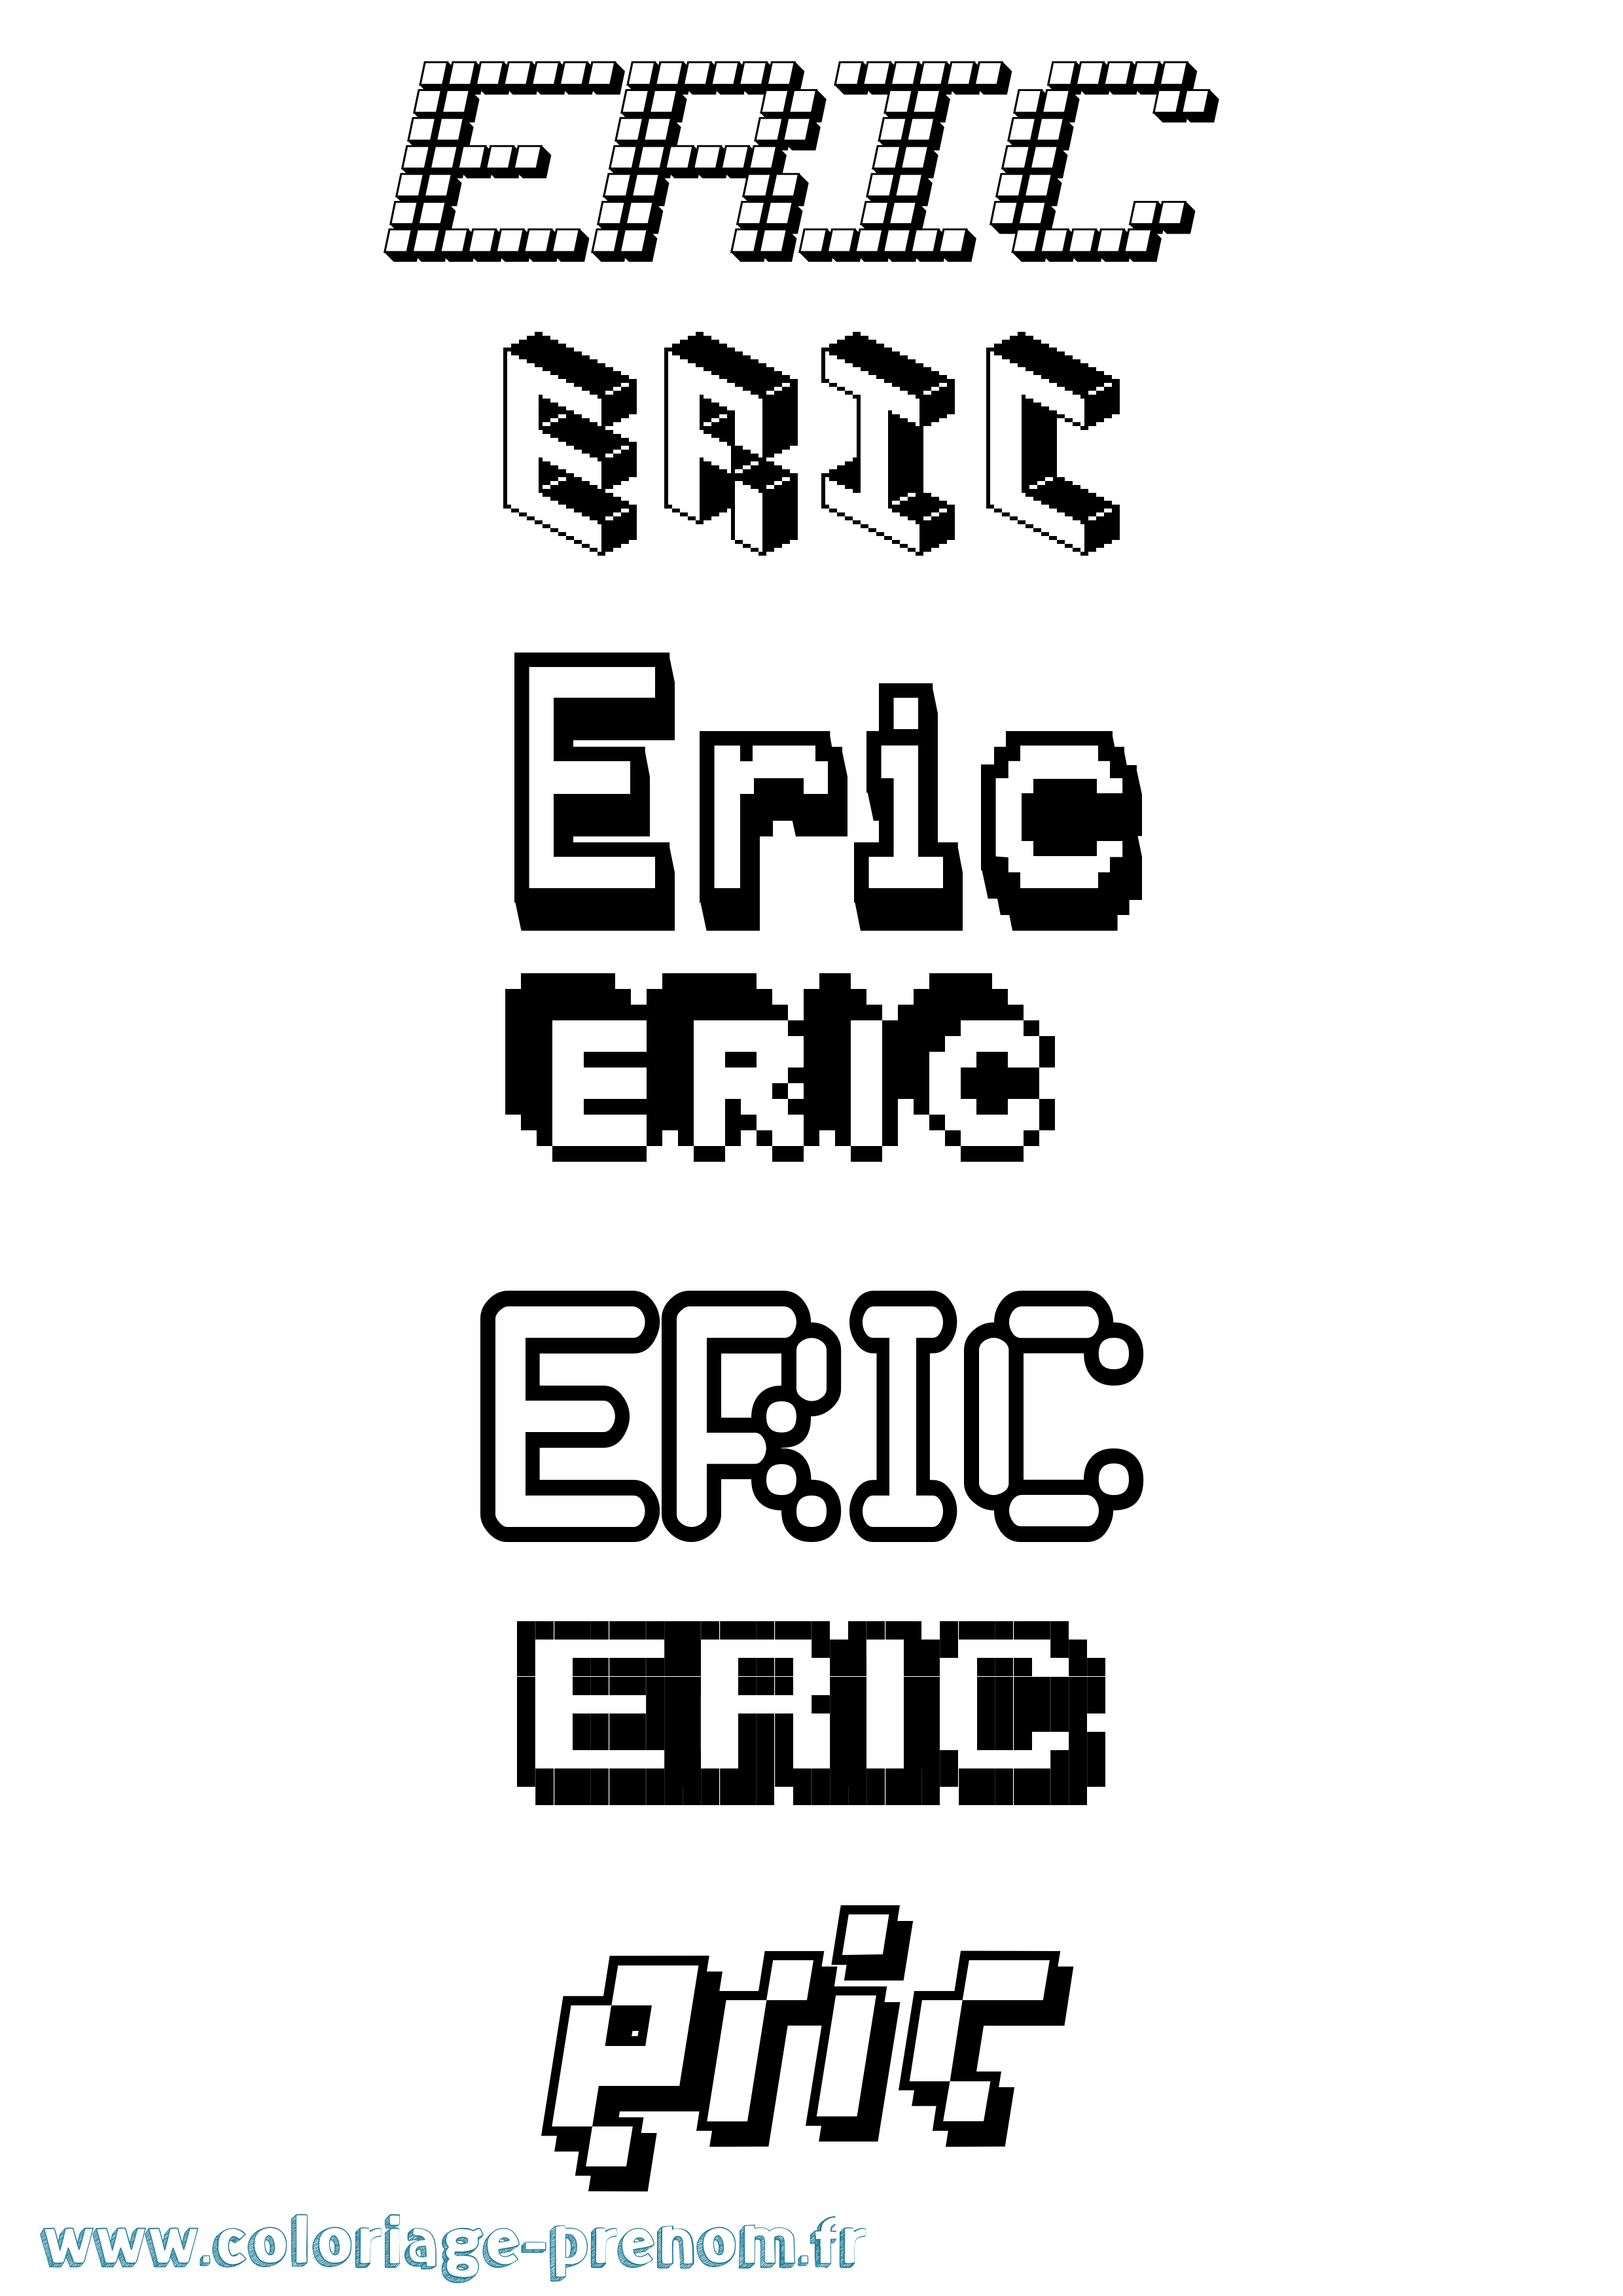 Coloriage prénom Eric Pixel